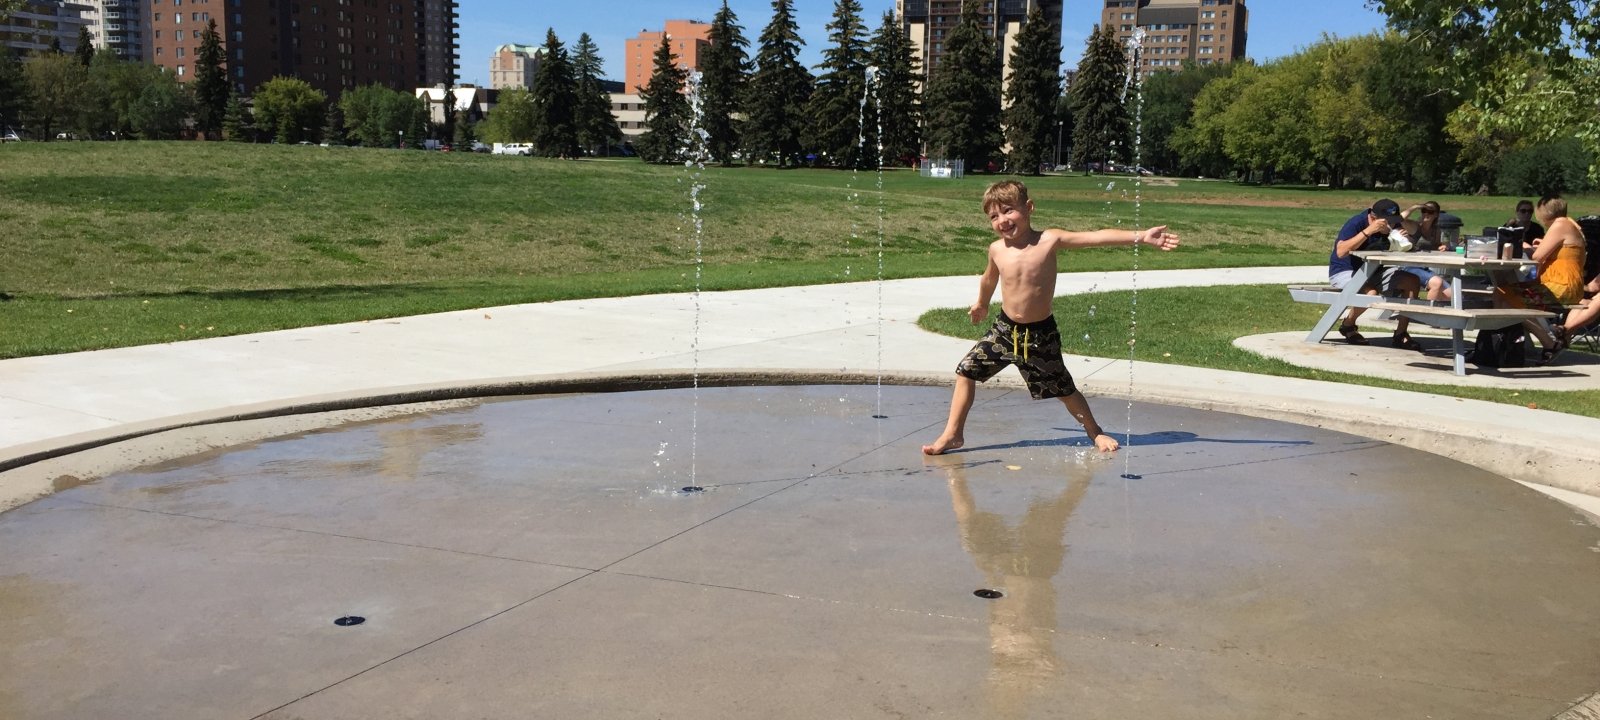 5 Ways to Play in Saskatoon This Summer